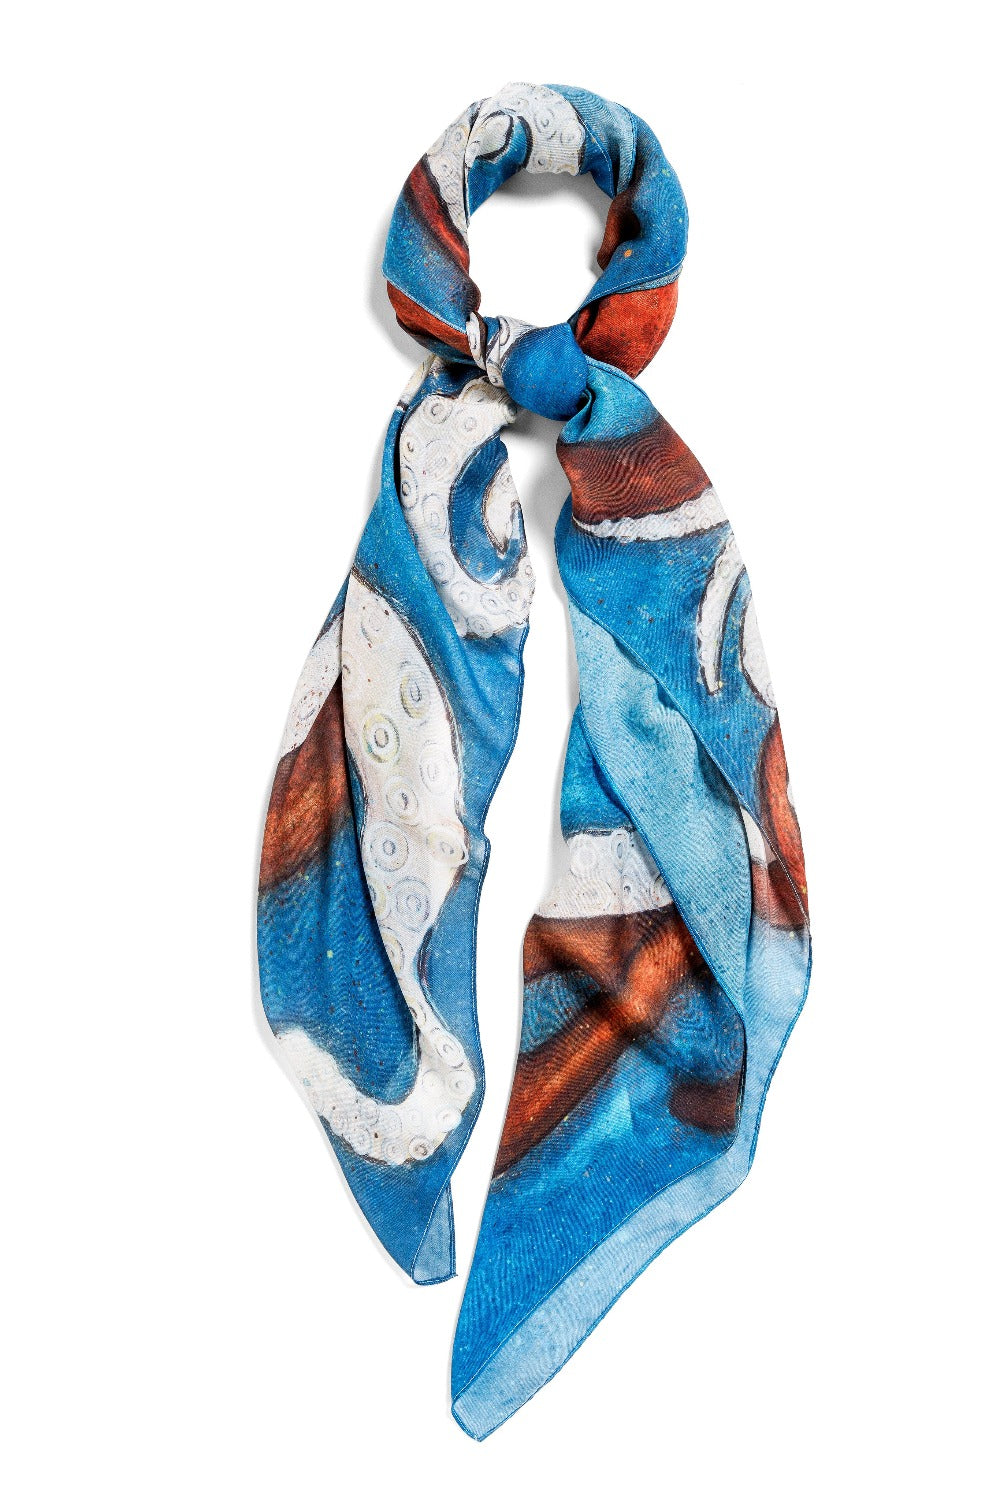 Kracken square modal cashmere scarf by Seth B. Minkin